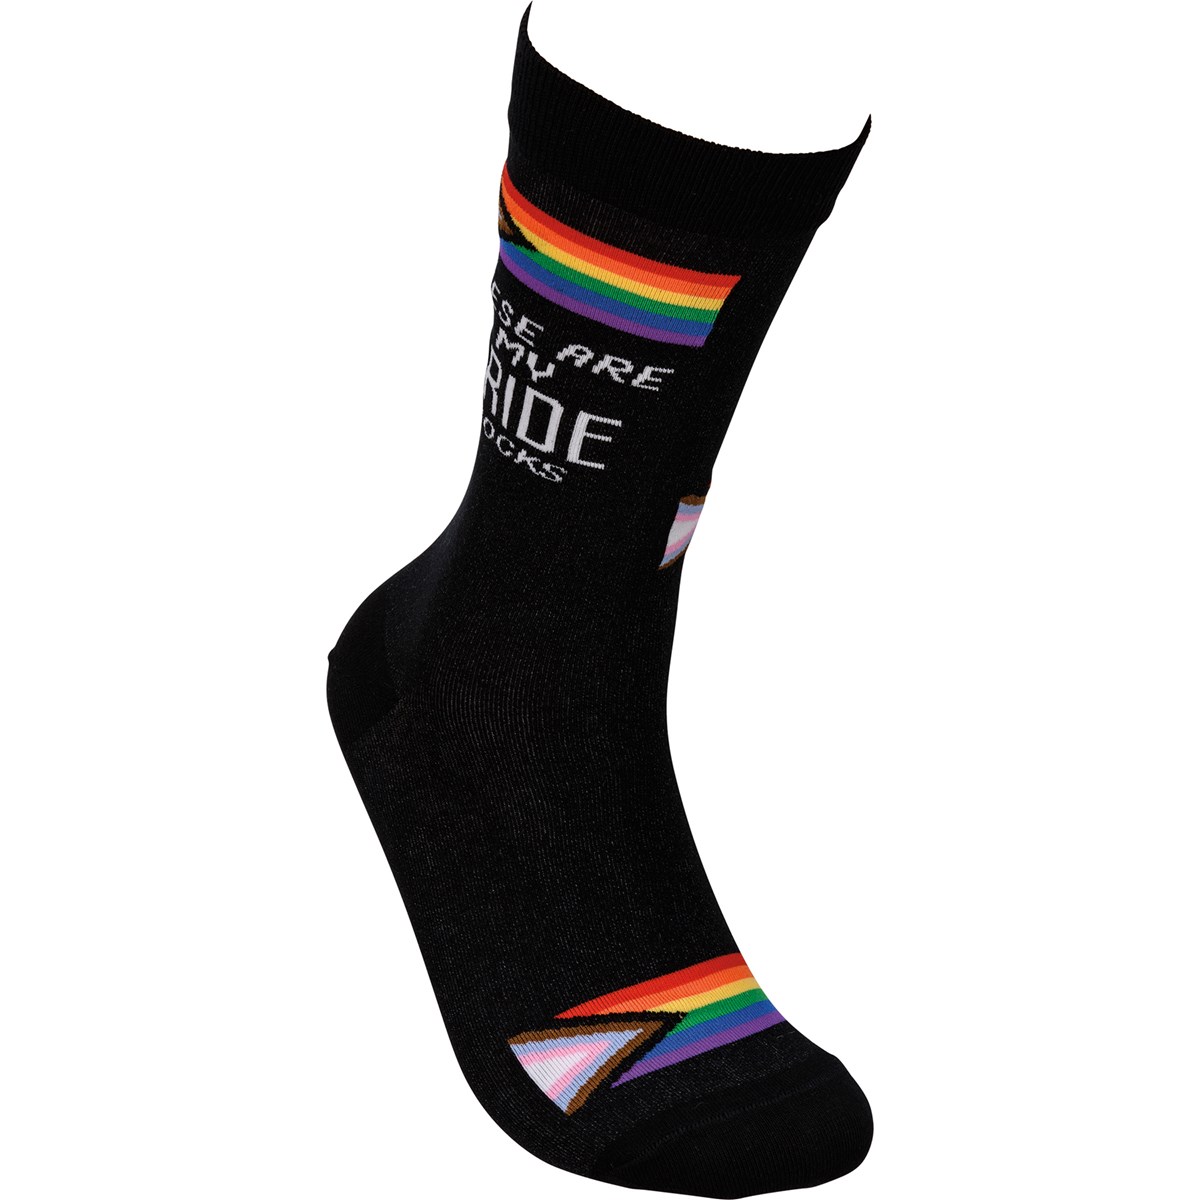 These Are My Pride Socks - Cotton, Nylon, Spandex